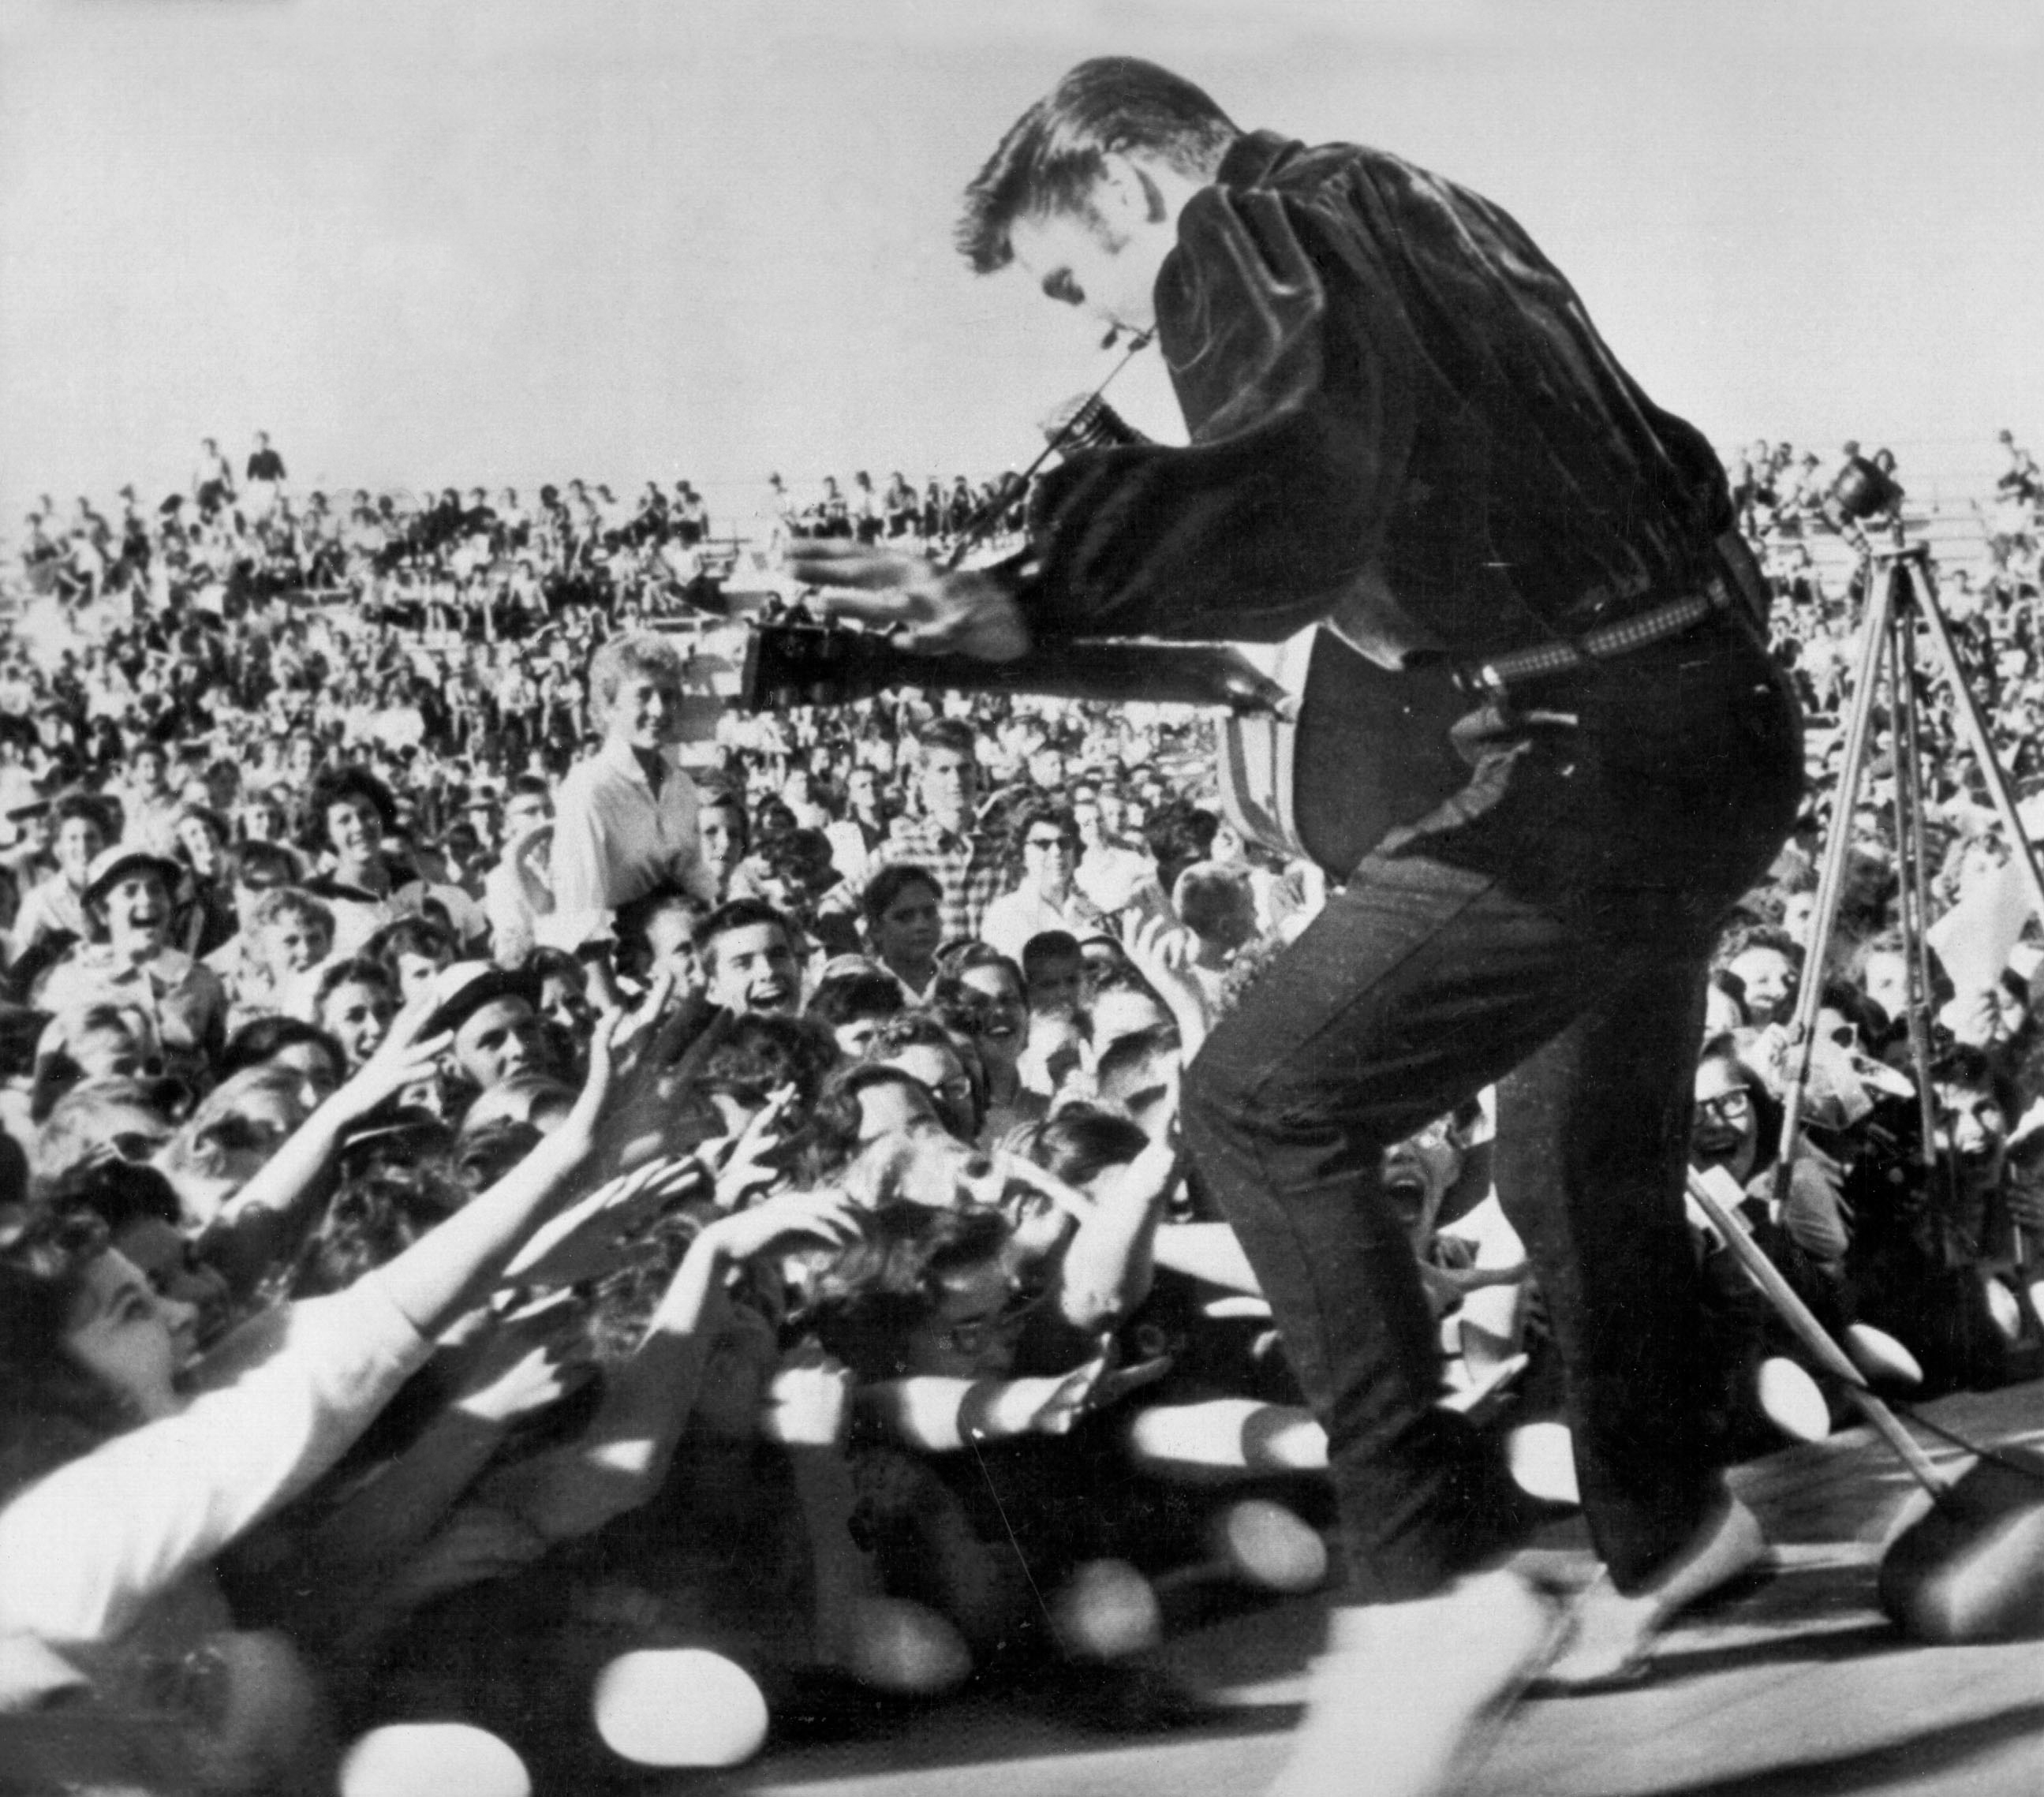 "Hound Dog" era Elvis Presley in front of a crowd